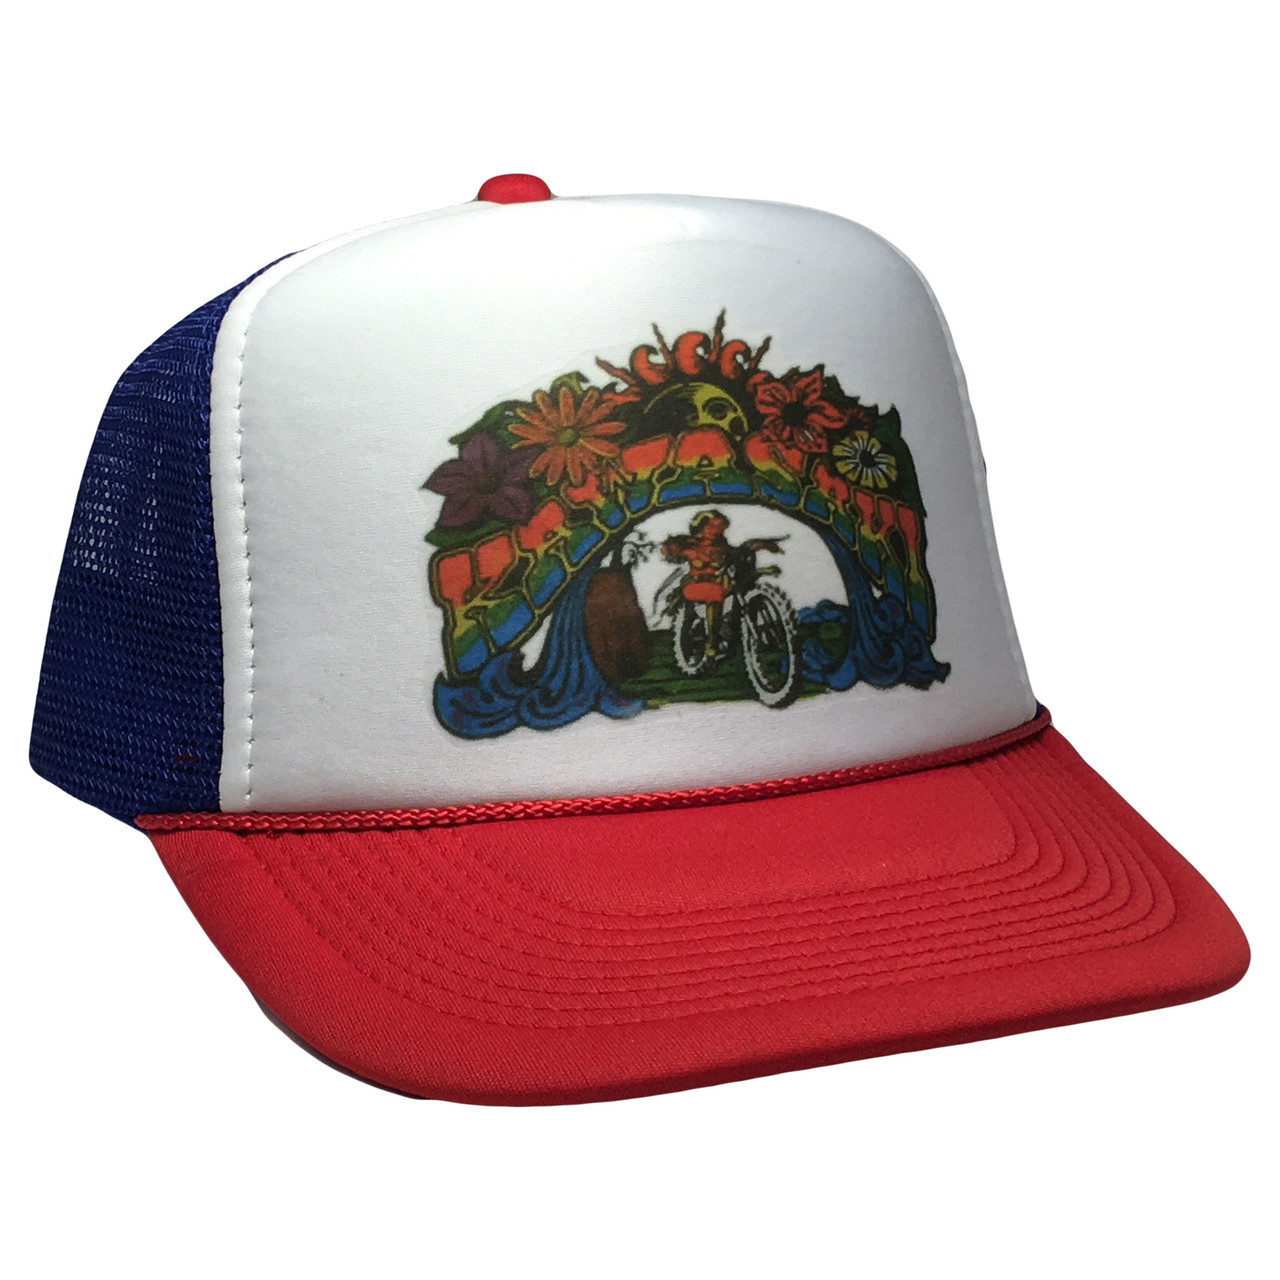 Kawasaki Flower Trucker Hat, Kawasaki Flower Hat, Kawasaki Flower, Kawasaki  Hat, Trucker Hat, Mesh Hat, Snap Back Hat, Adjustable Hat